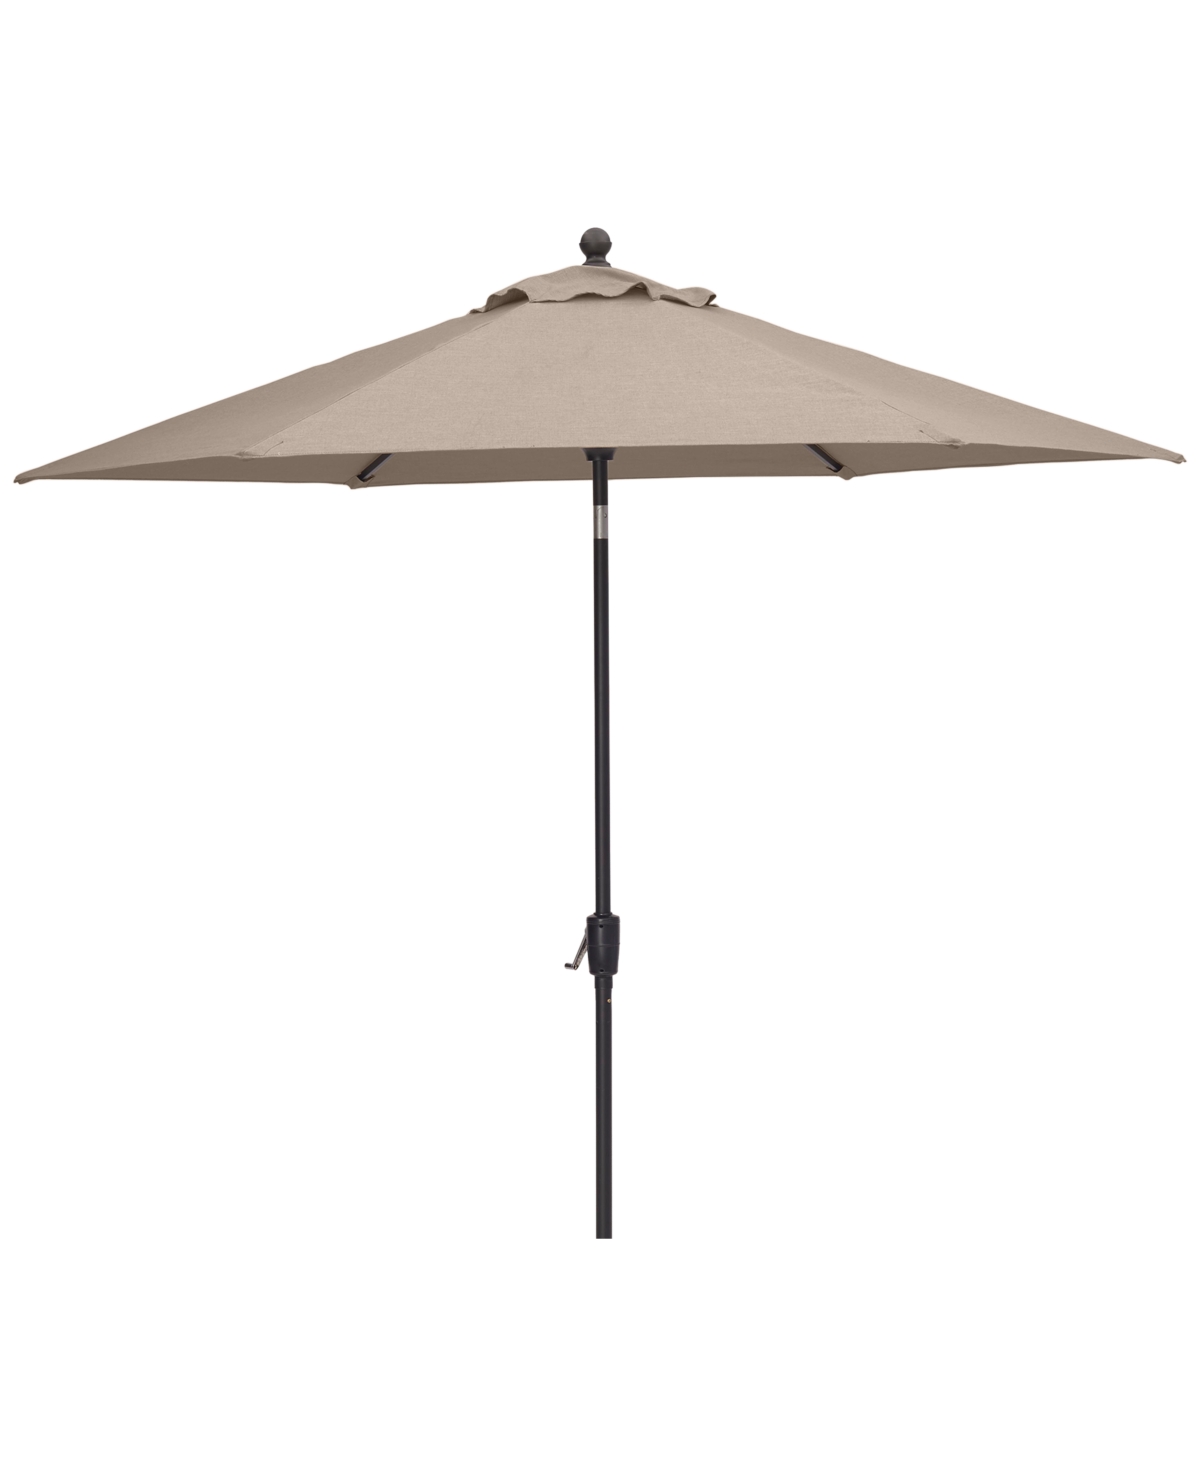 10397495 Stockholm Outdoor 11 Umbrella with Outdoor Fabric, sku 10397495